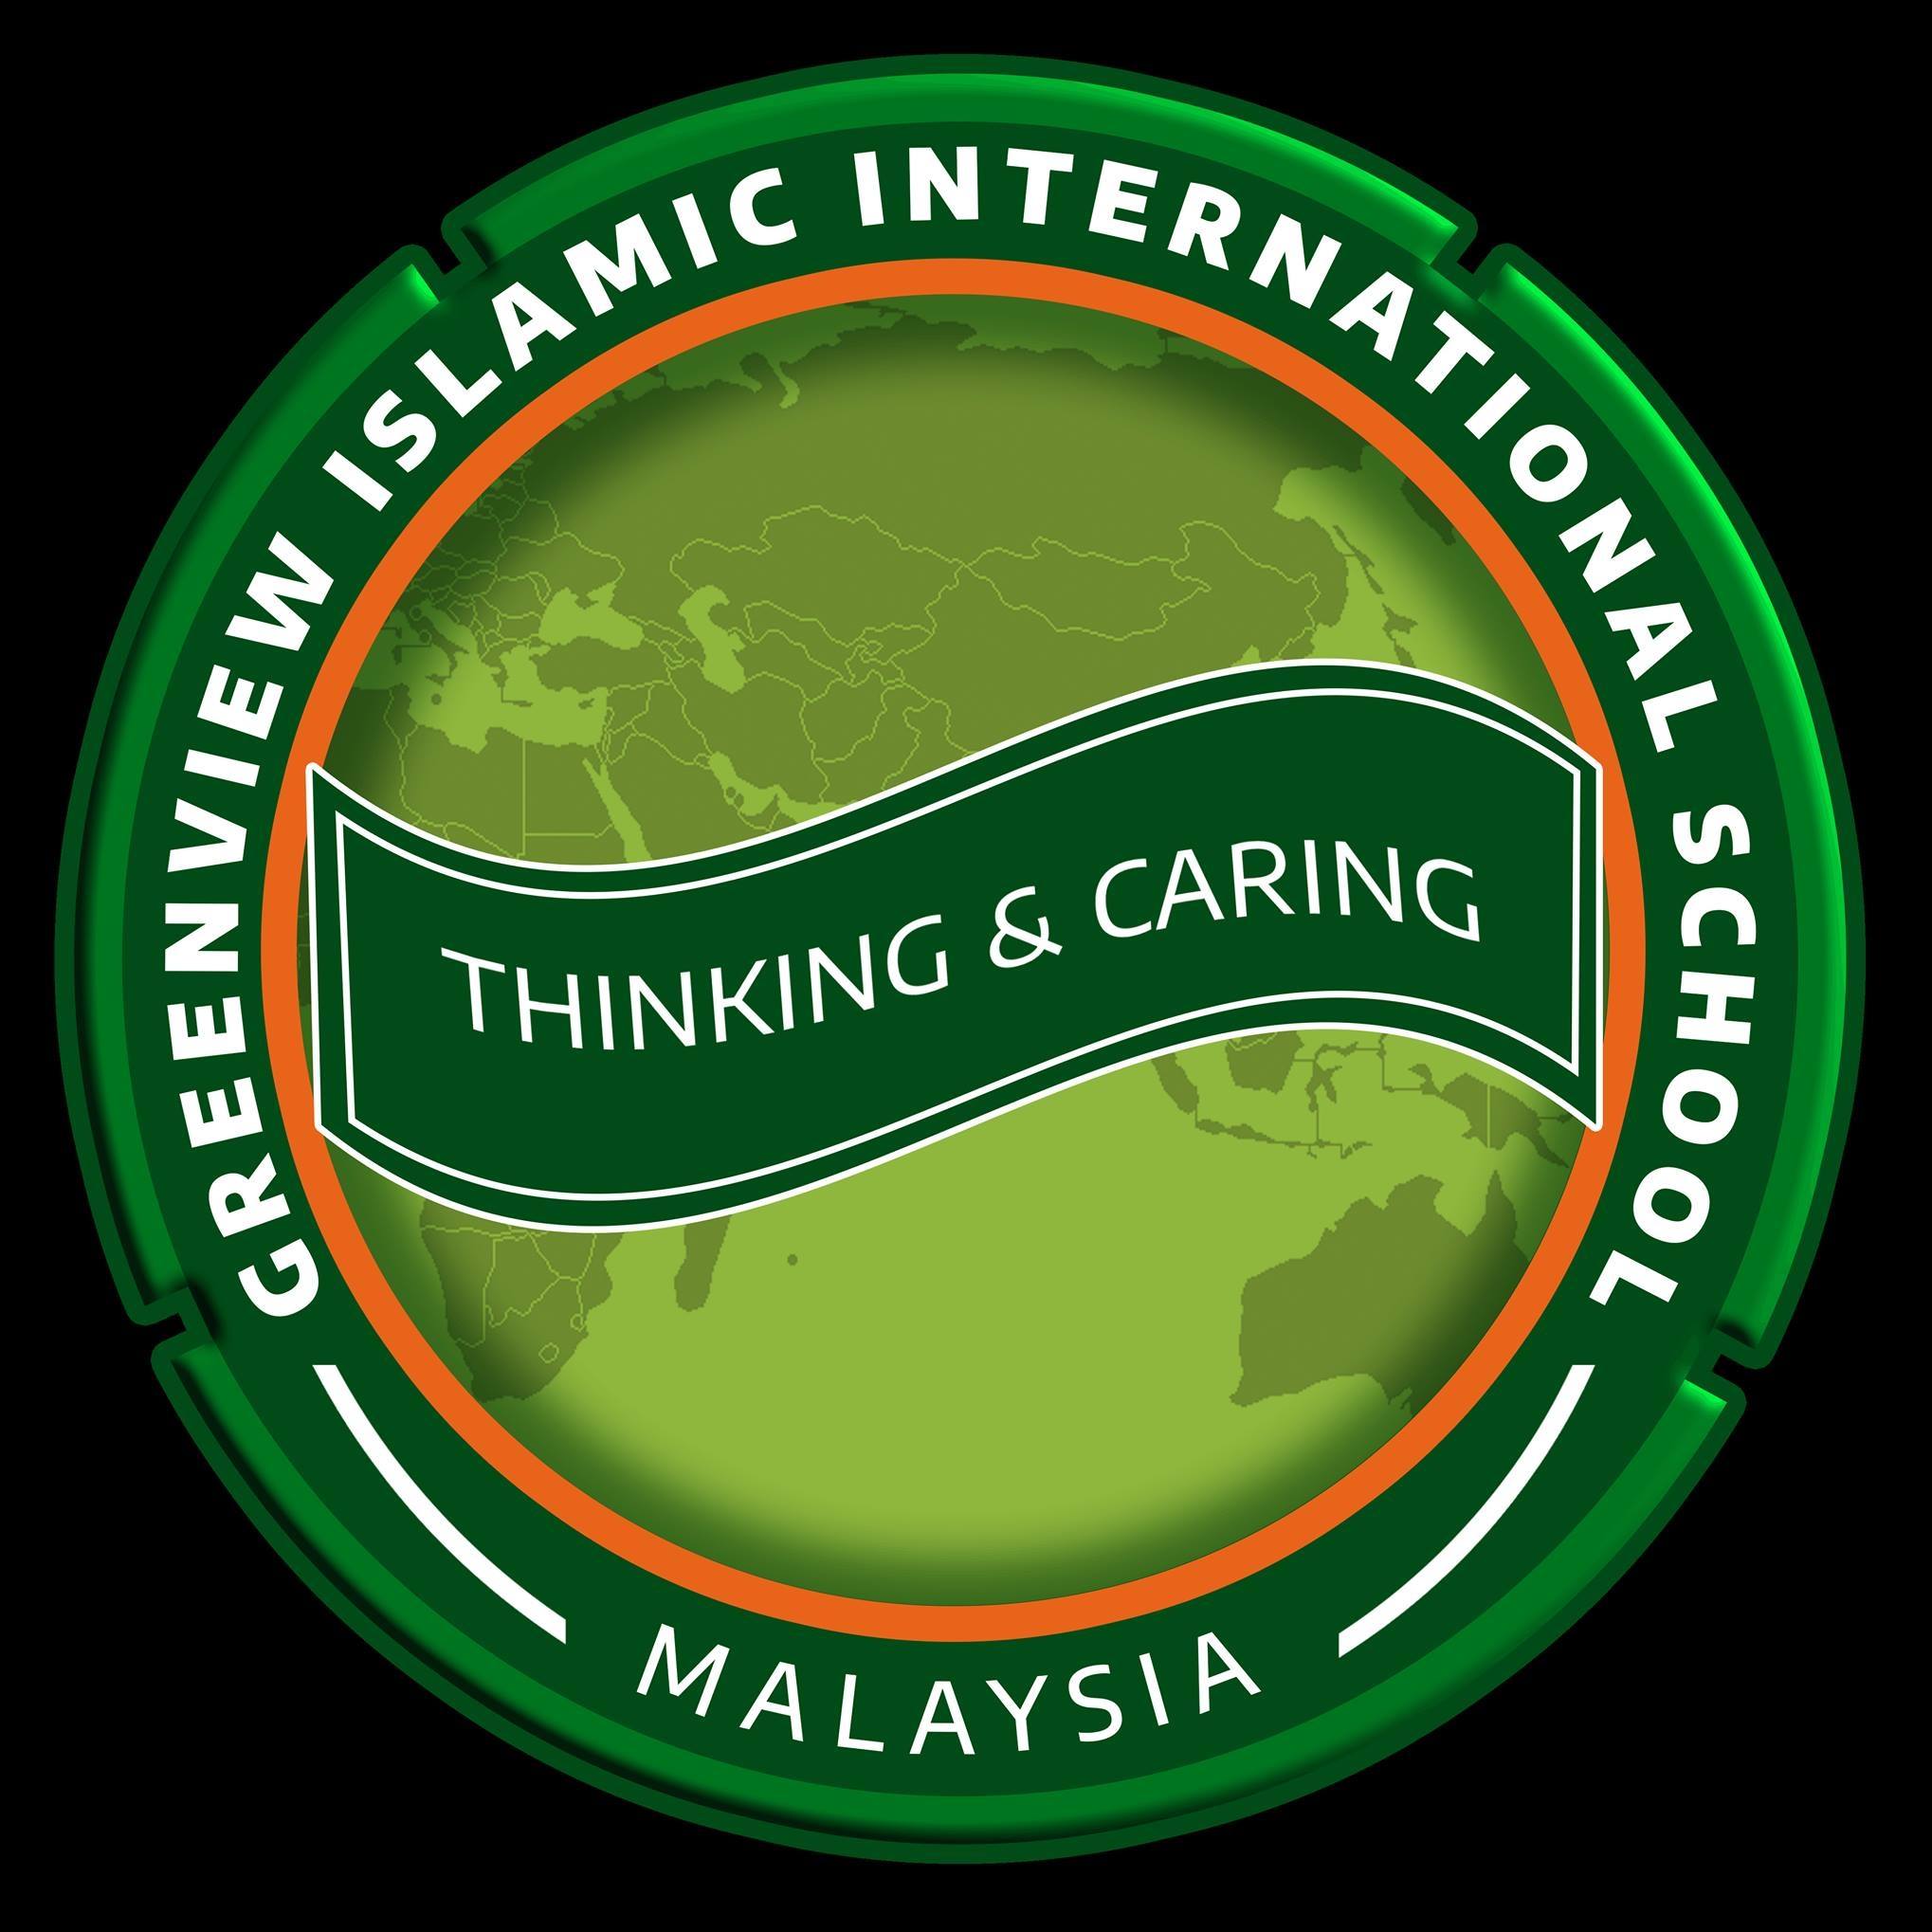 Greenview Islamic International School